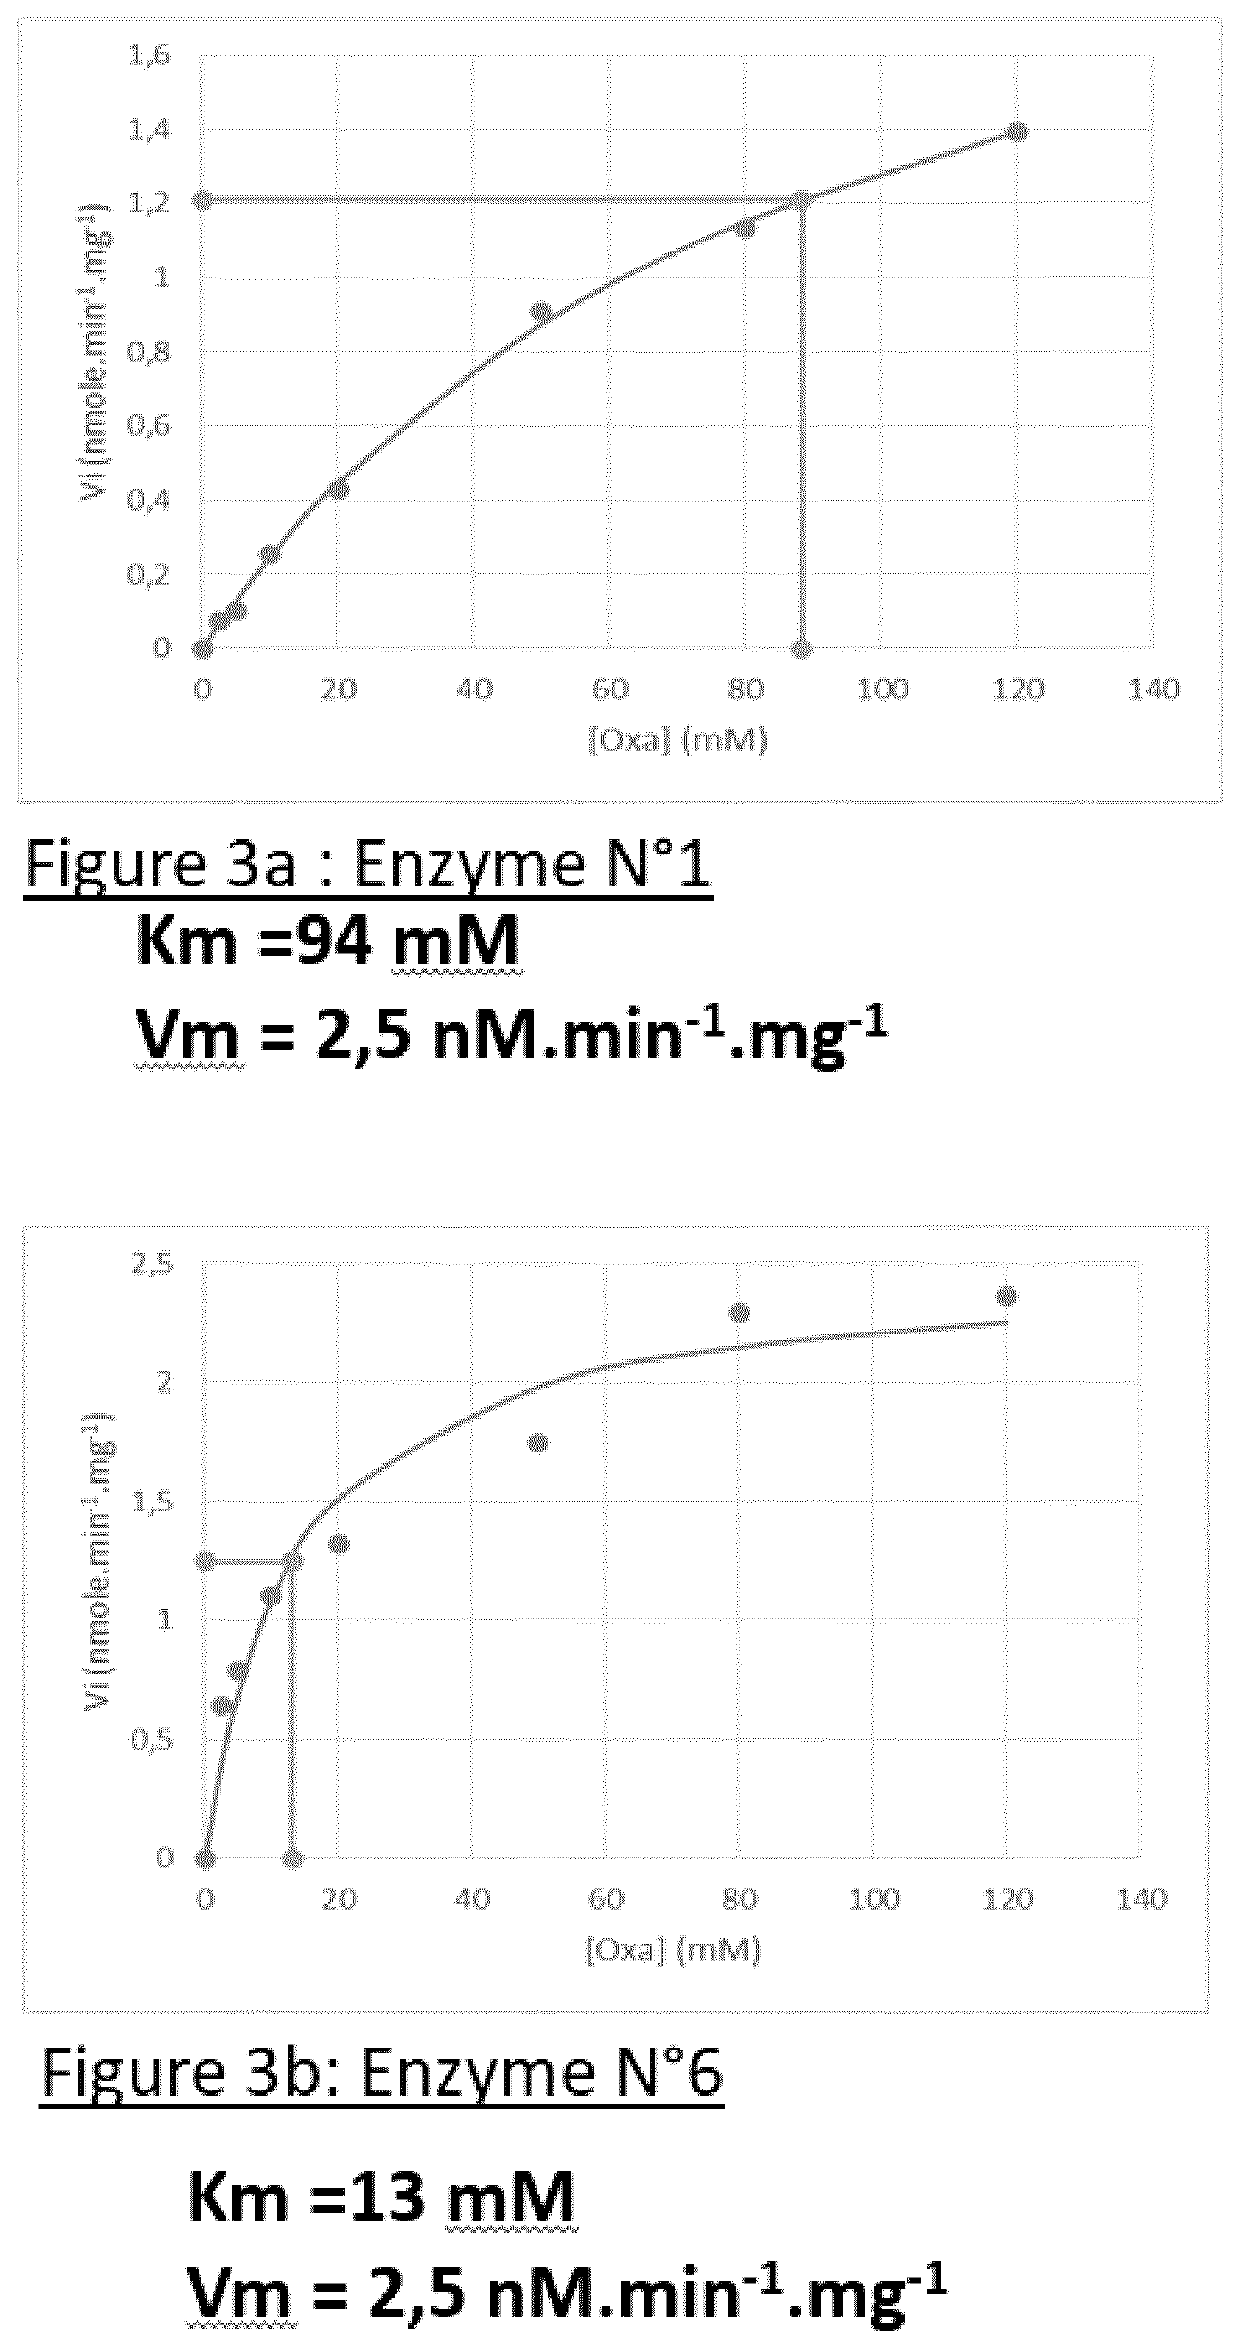 Malonic semi-aldehyde-producing yeasts